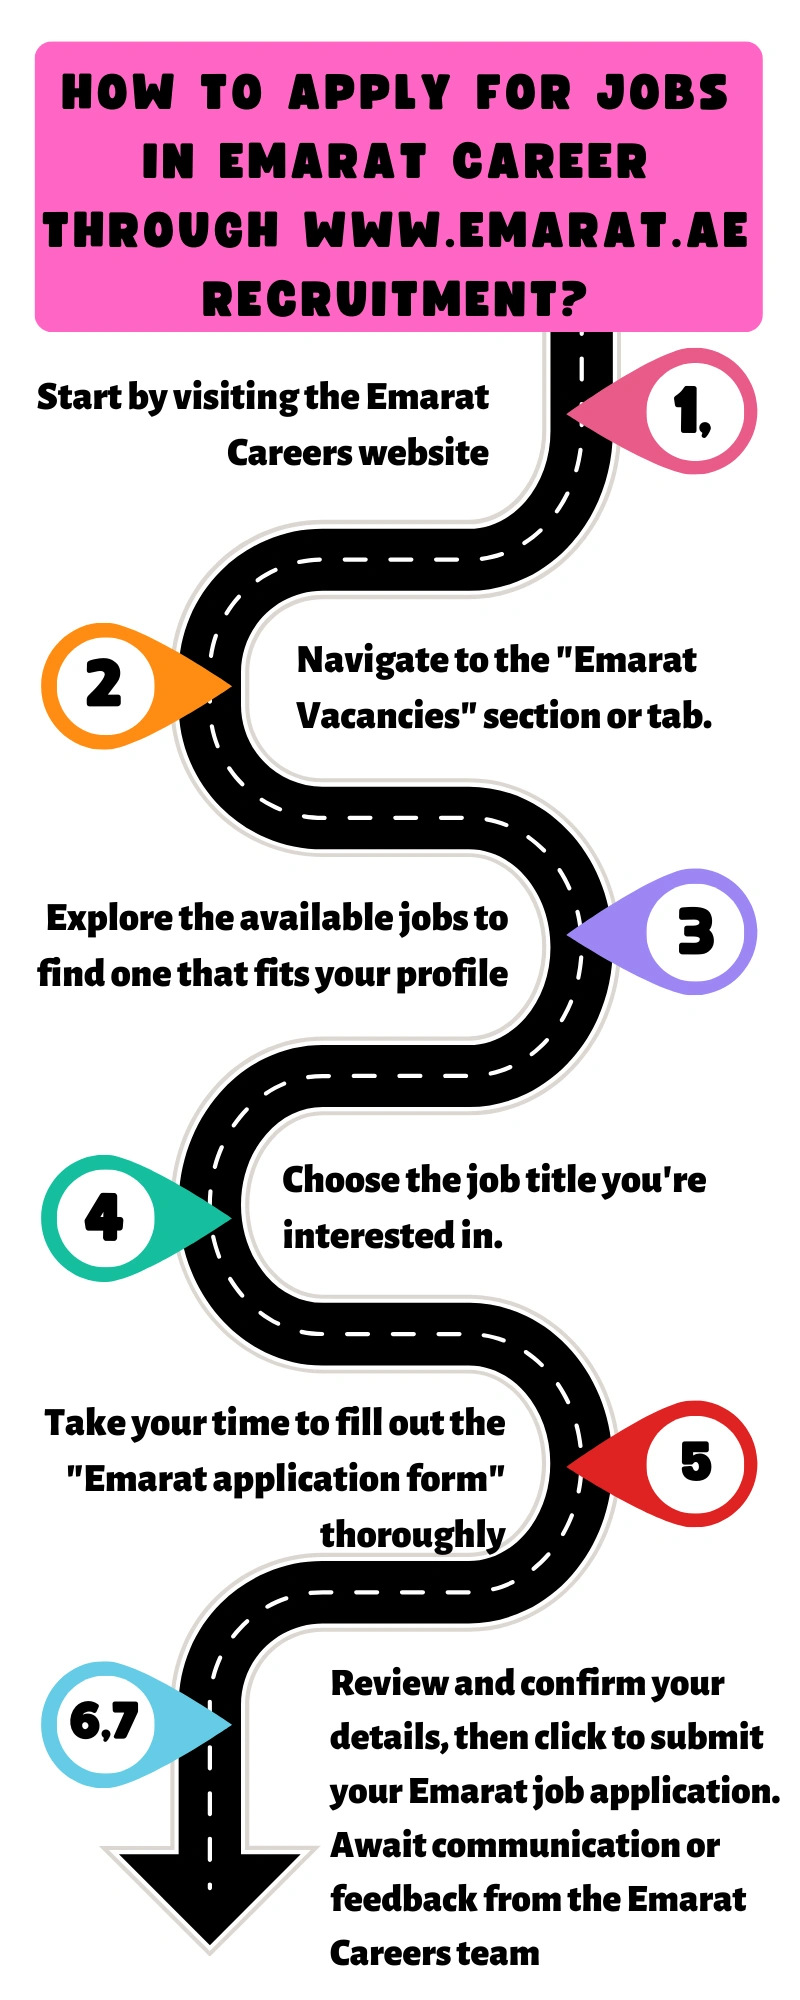 How to Apply for Jobs in Emarat Career through www.emarat.ae recruitment?